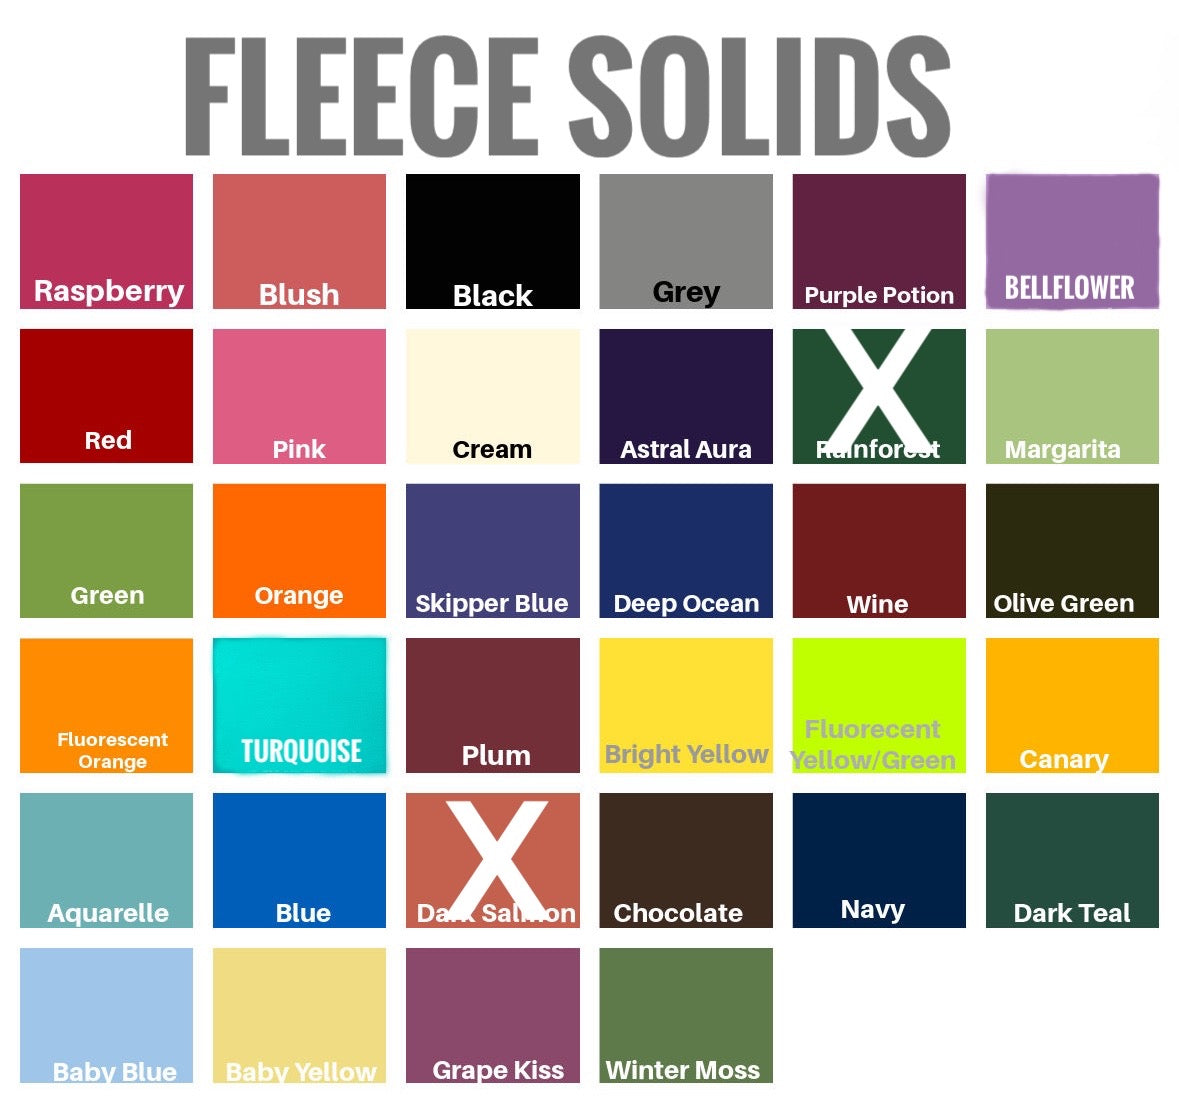 Fleece Snood